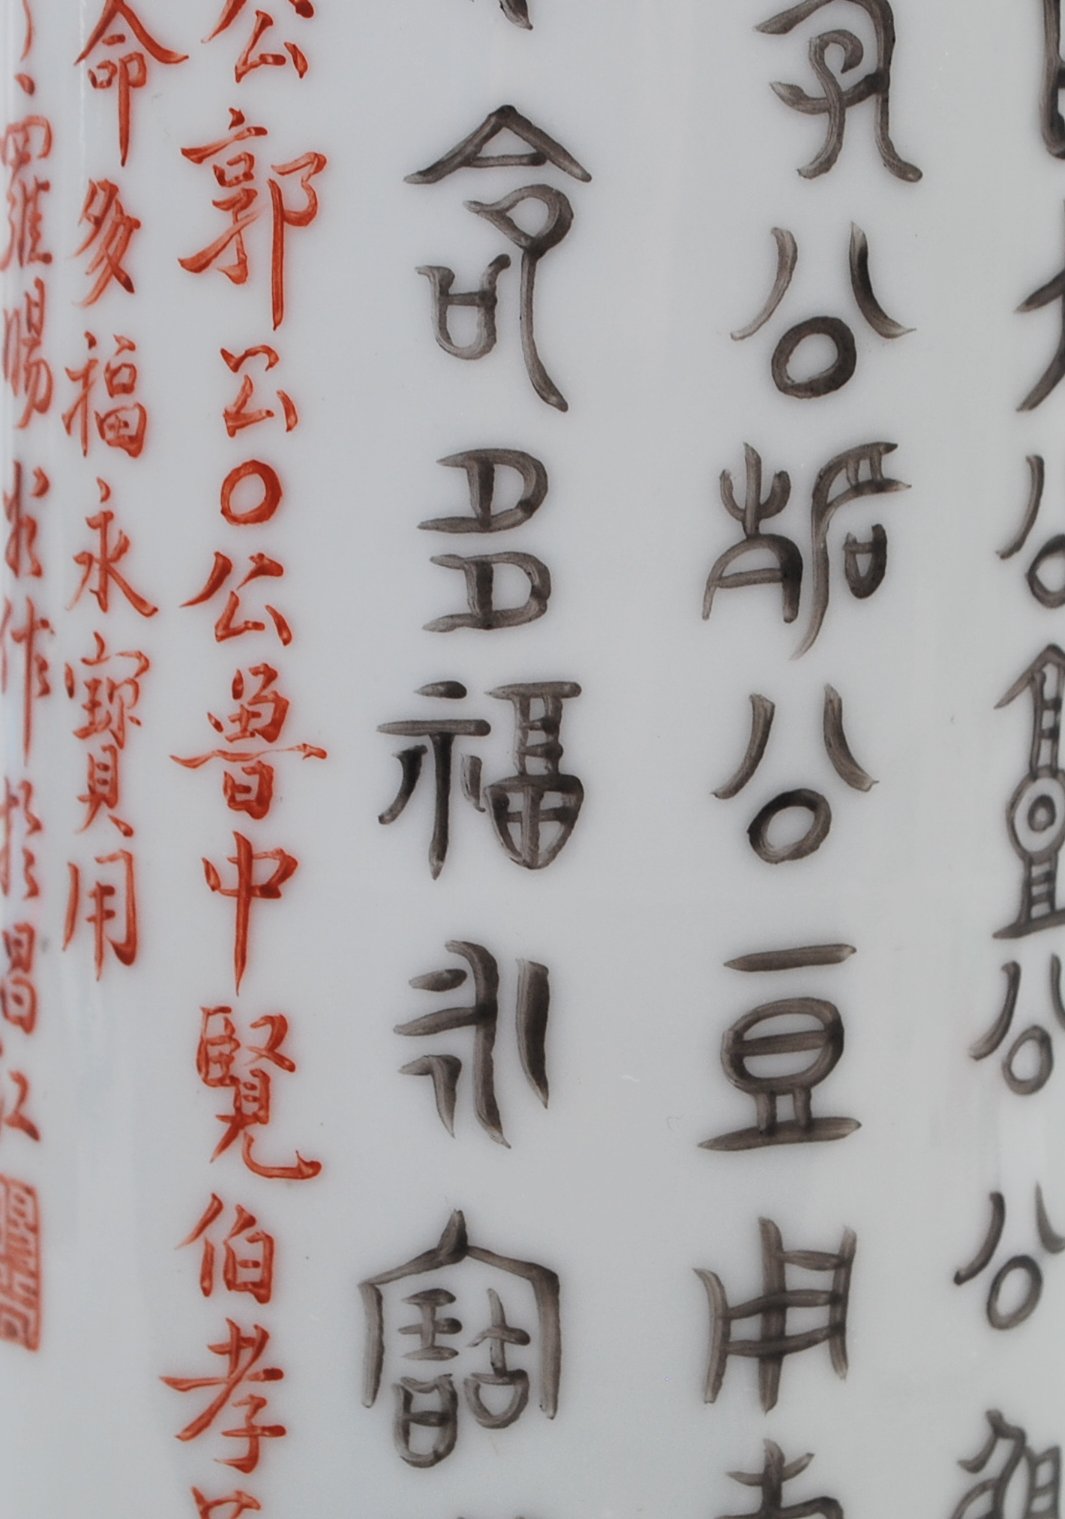 19TH CENTURY ANTIQUE CHINESE ORIENTAL CERAMIC VASE WITH KAISHU SCRIPT - Image 7 of 9